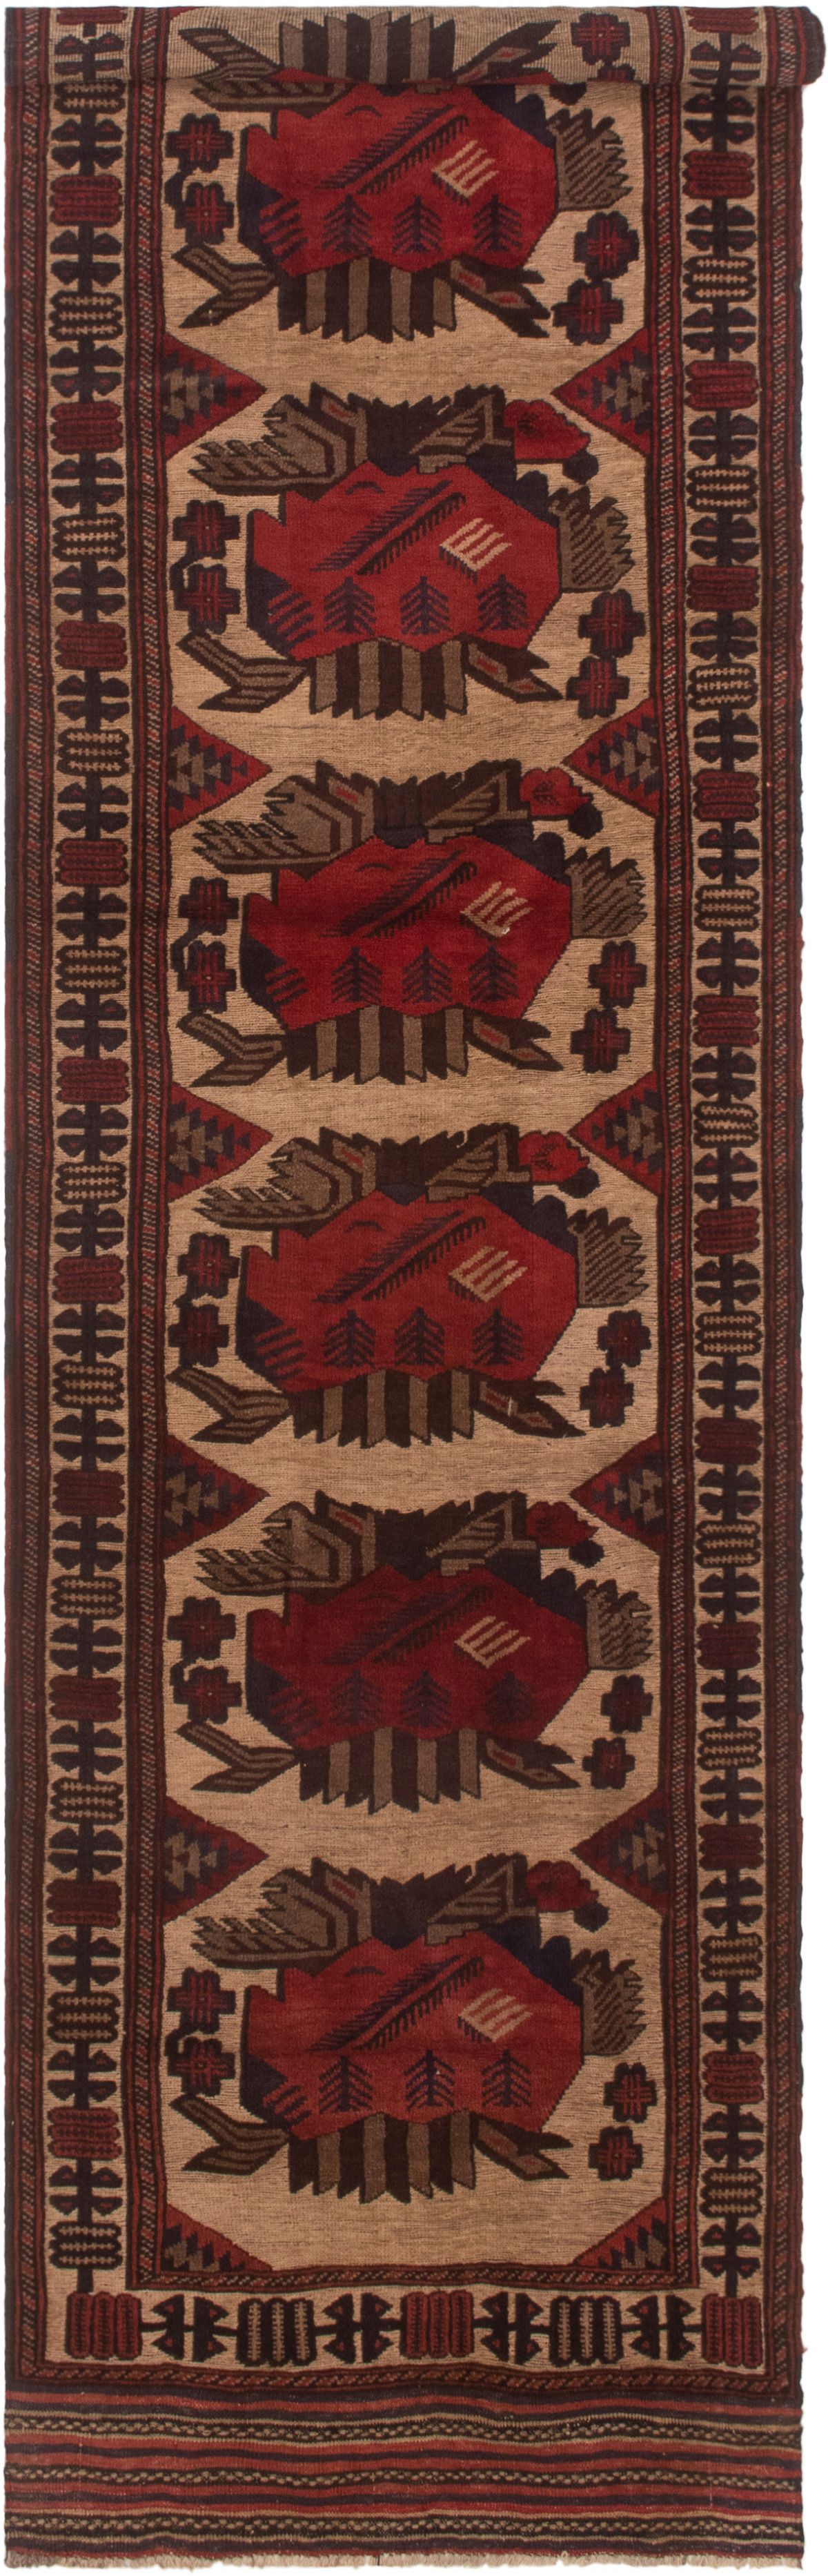 Hand-knotted Tajik Caucasian Cream, Red Wool Rug 2'11" x 12'4" Size: 2'11" x 12'4"  